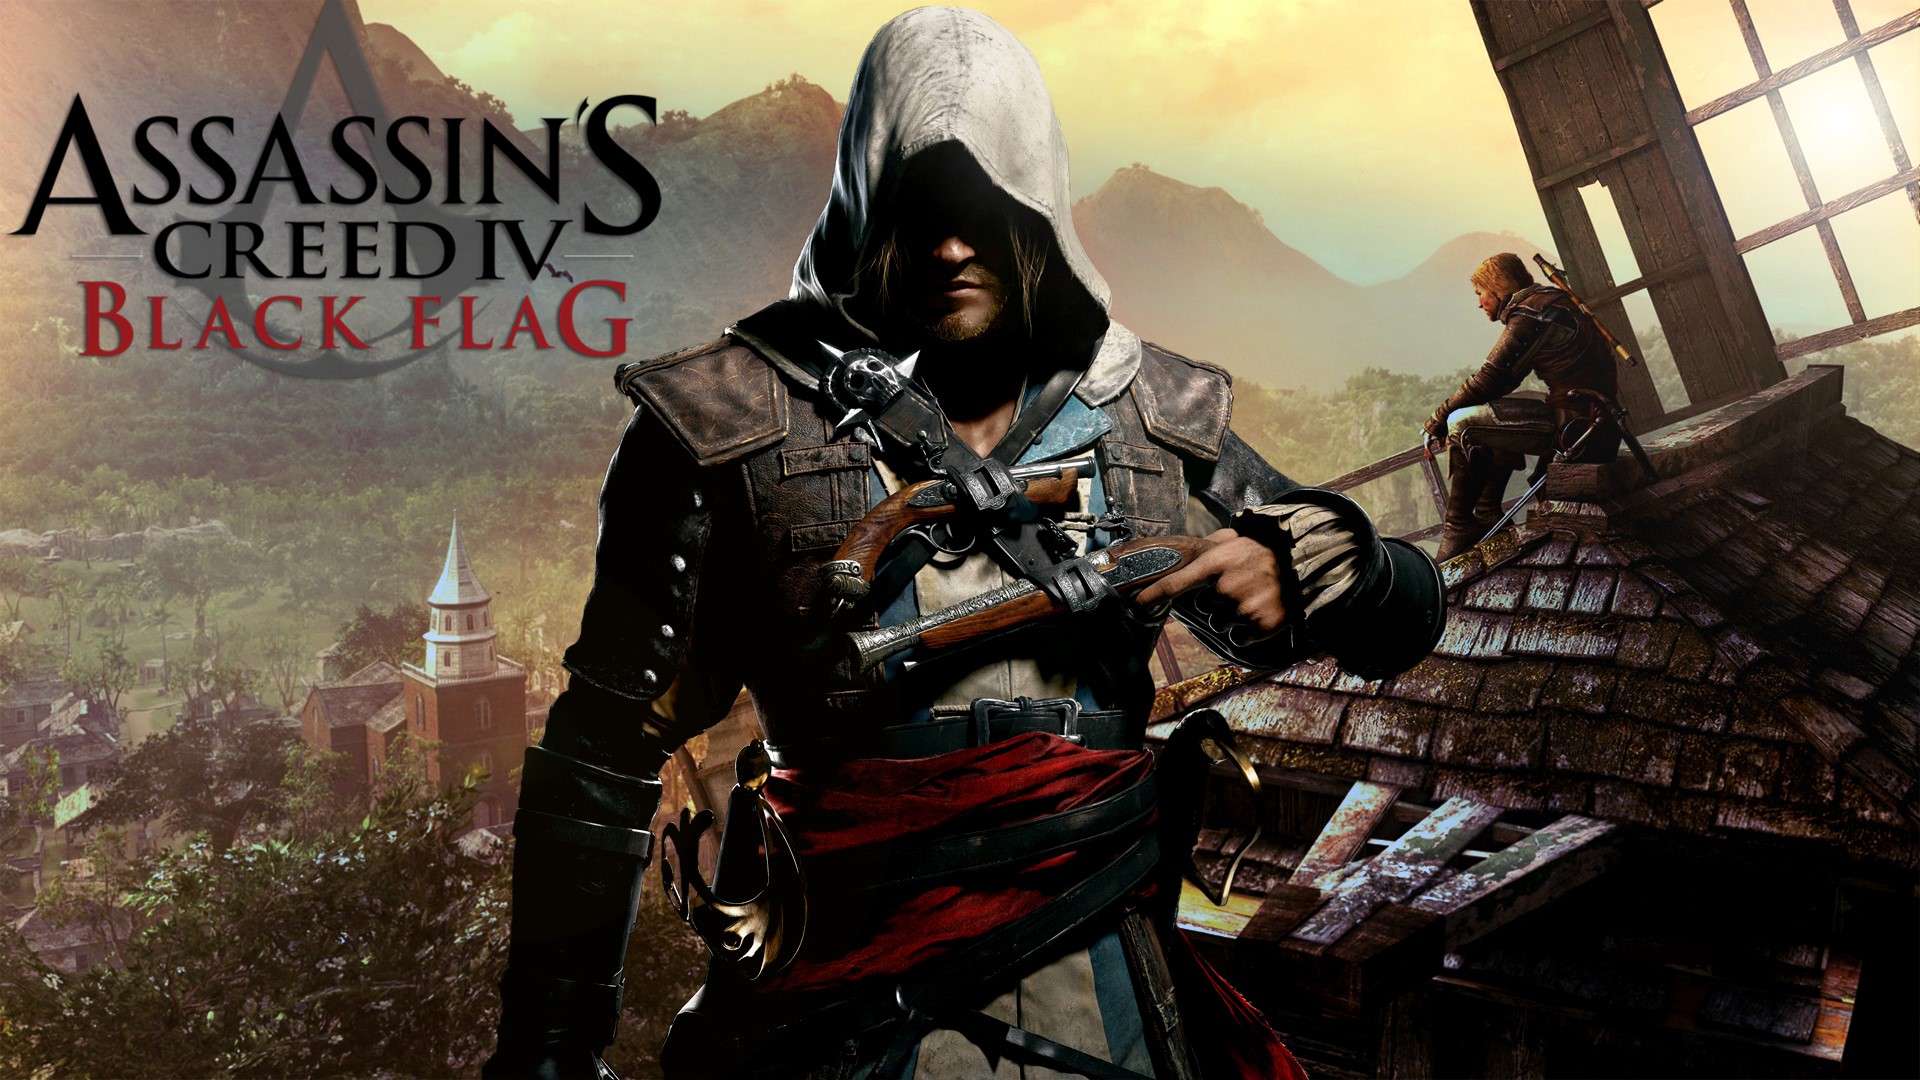 Асасин крид черный флаг на русском. Ассасин Крид 4 черный флаг. Assassin’s Creed IV: Black Flag – 2013. Ассасин Крид Блэк флаг игра. Assassin's Creed 4 Black Flag обложка.